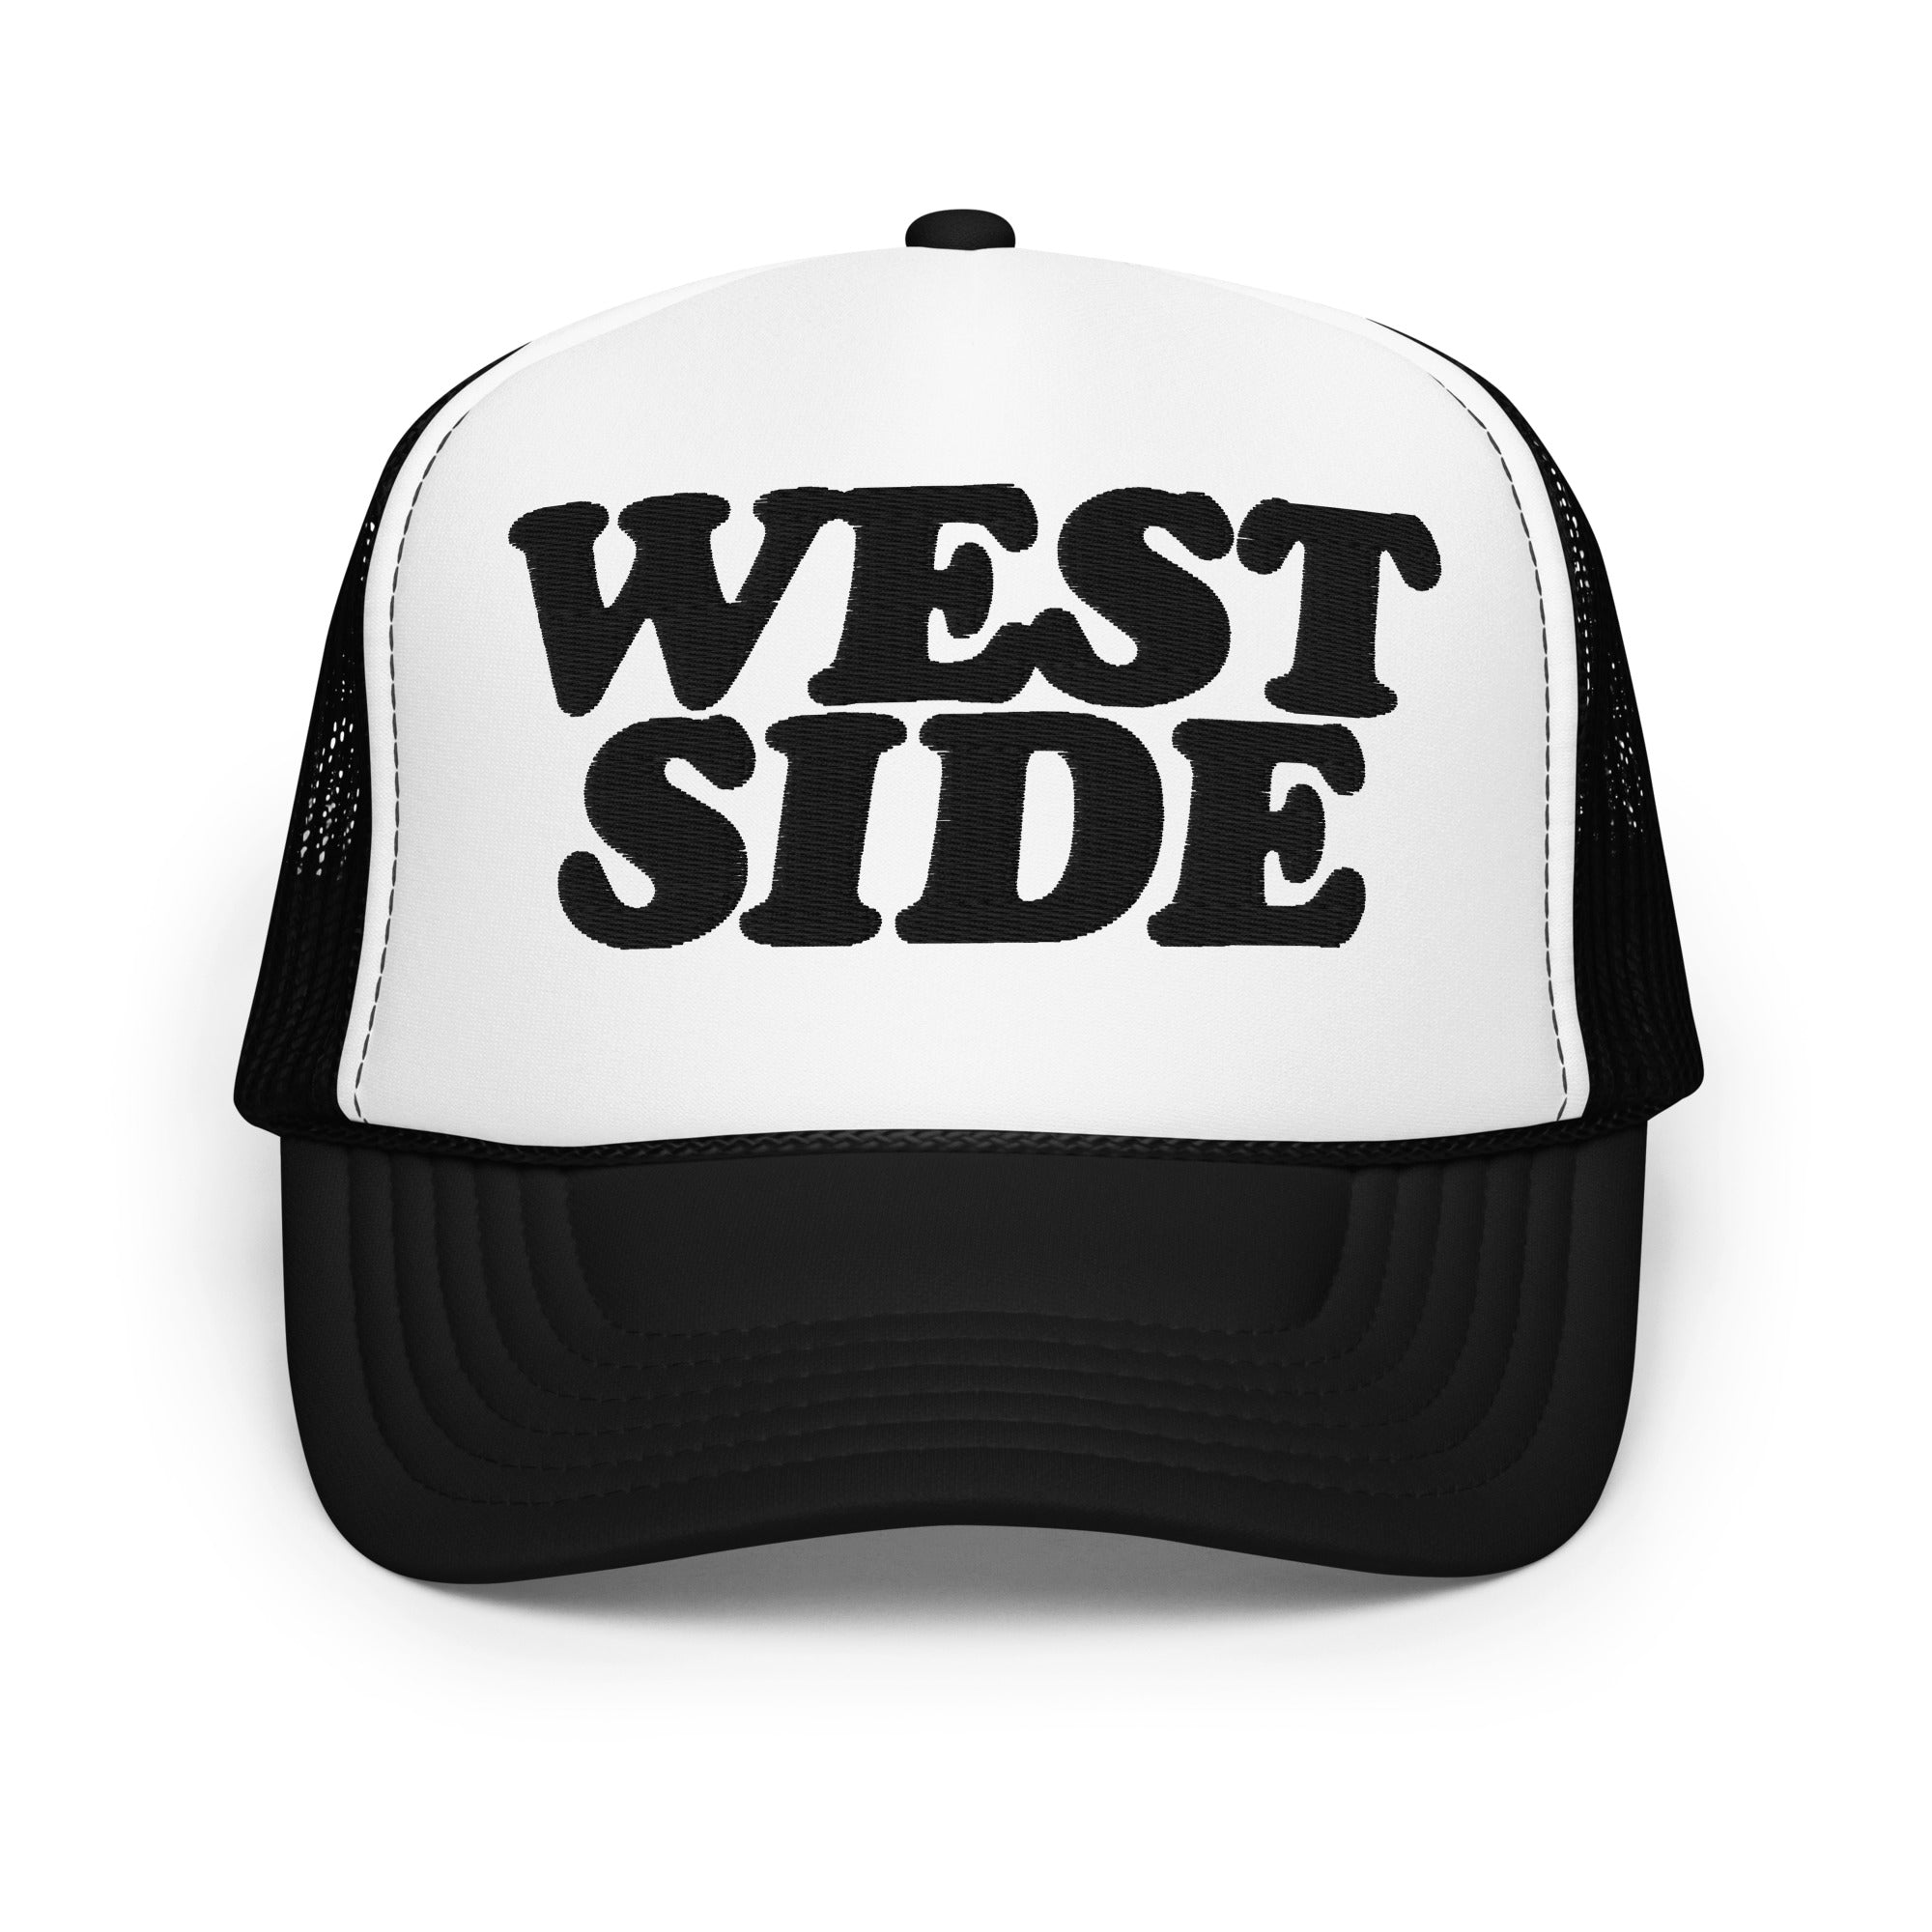 West Side Foam Trucker Hat - Embroidered - Black / White  Default Title  